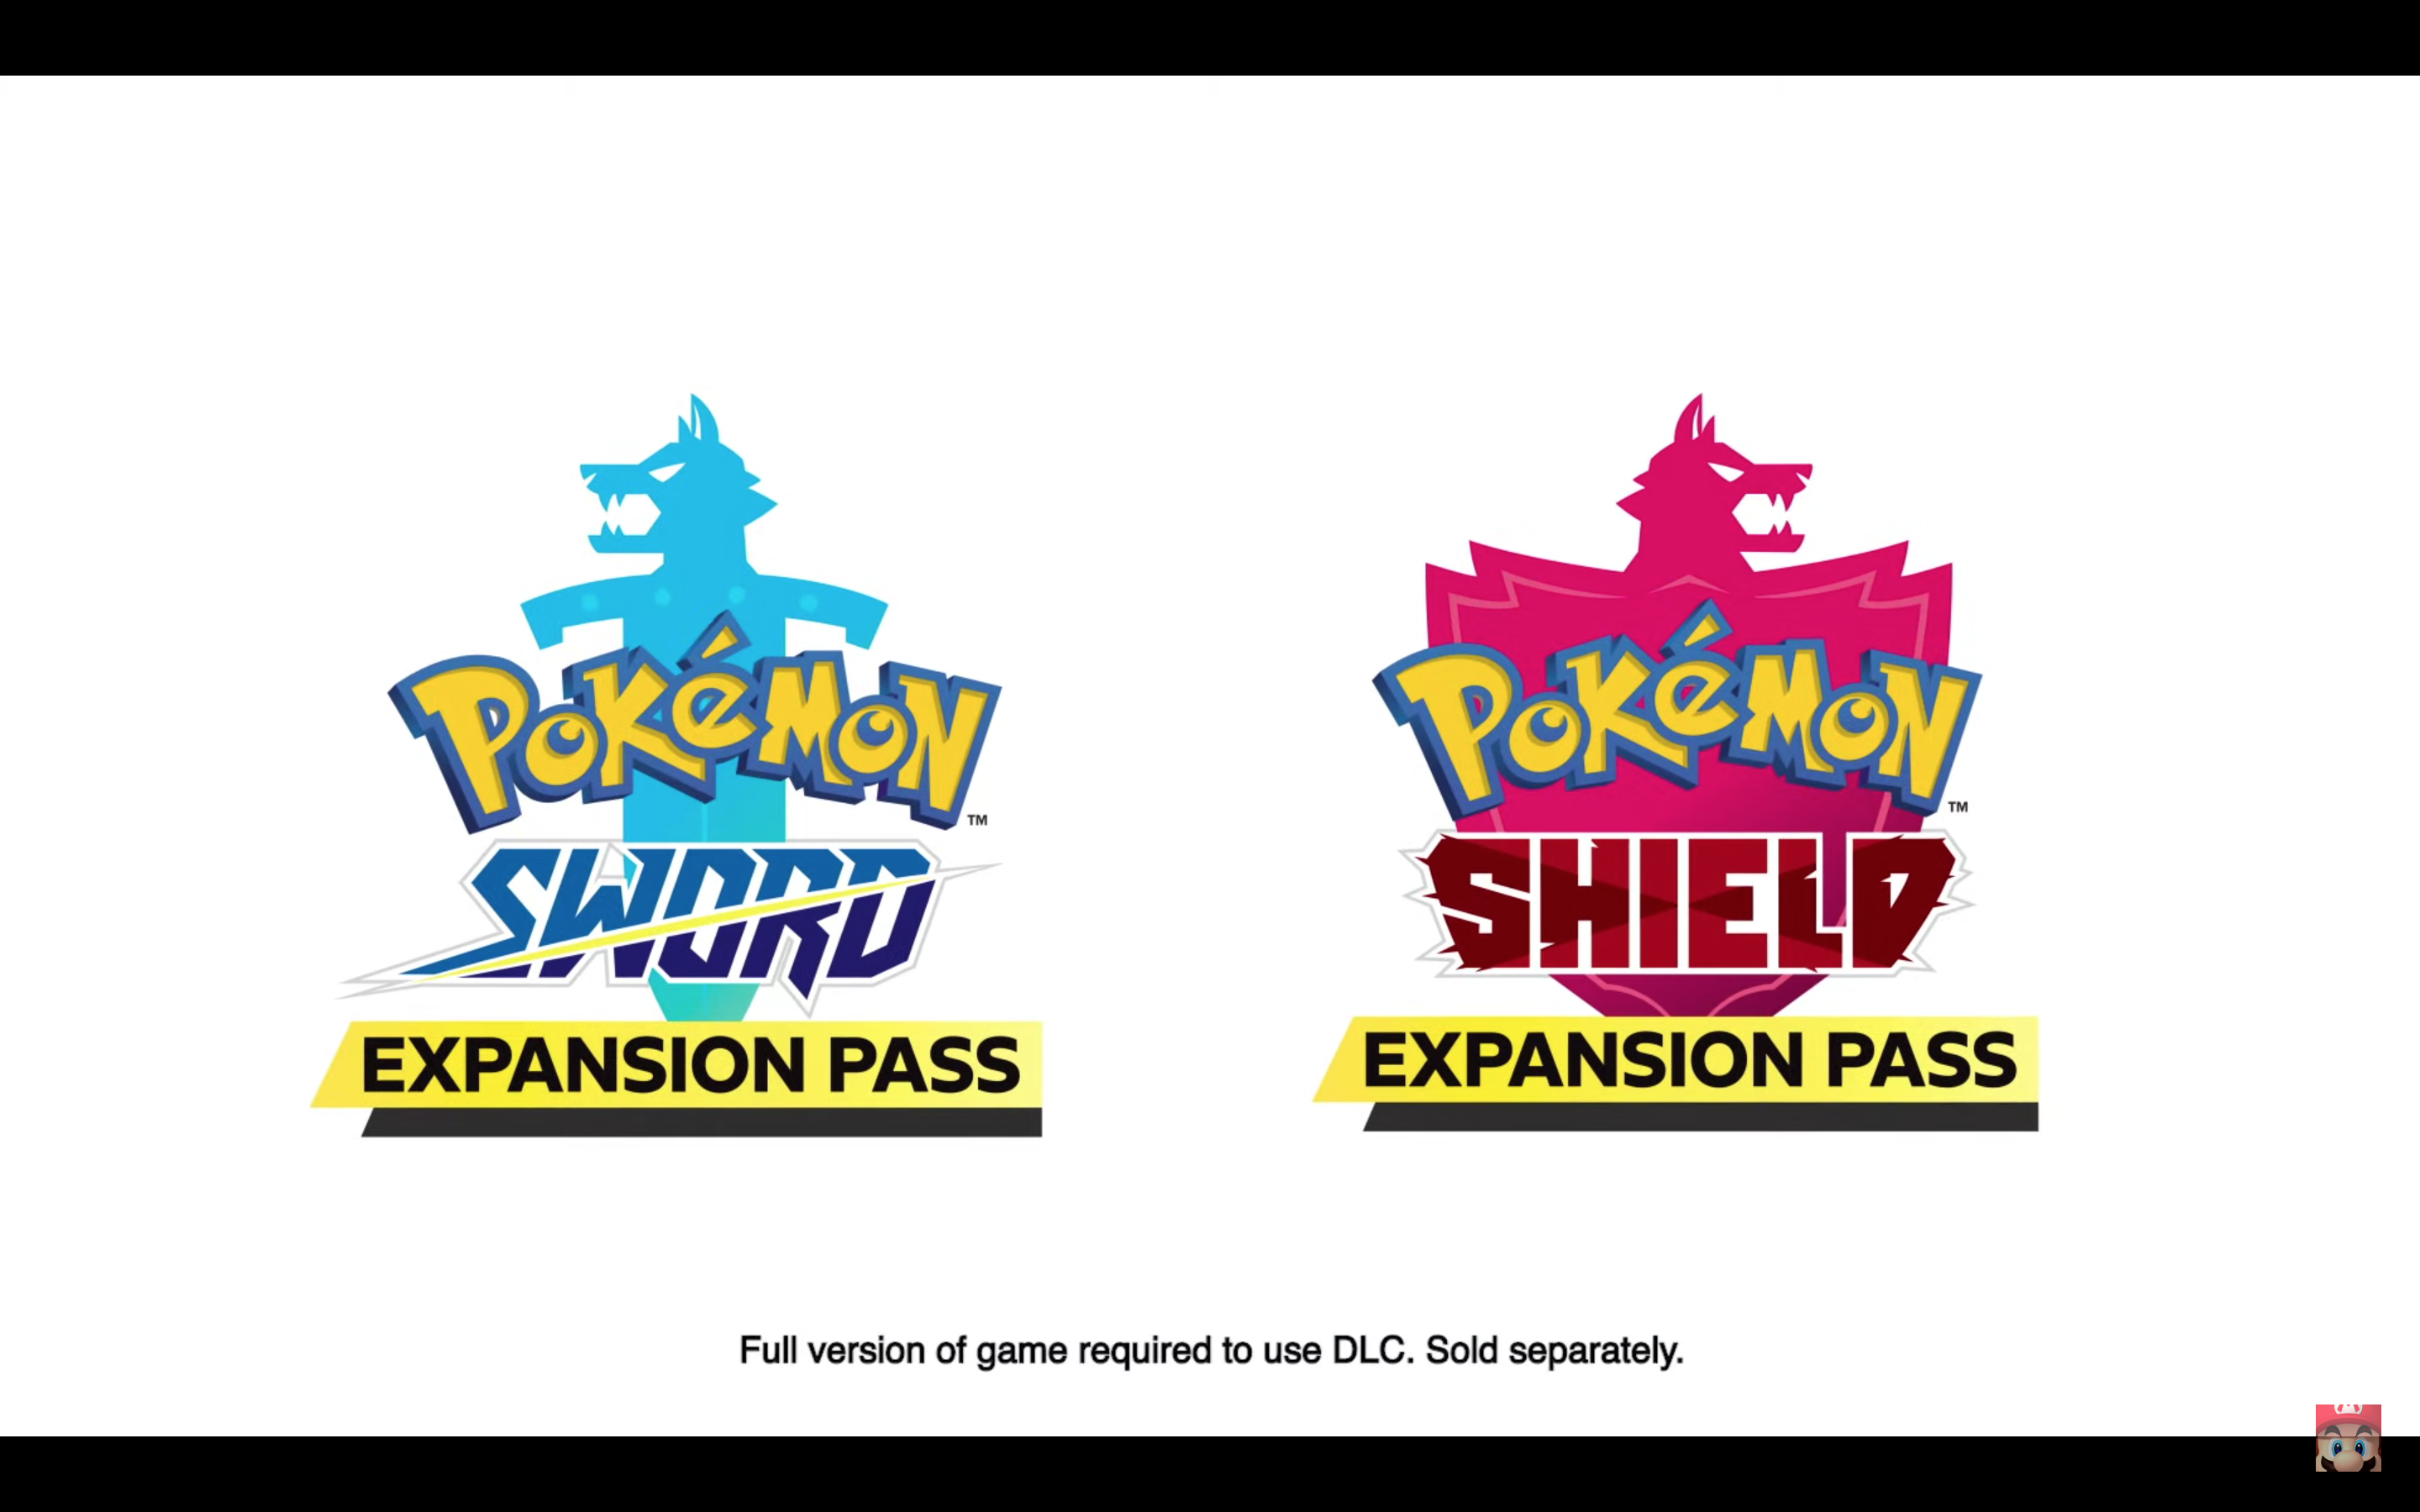 Pokémon Sword and Shield news: Game Freak to introduce 200+